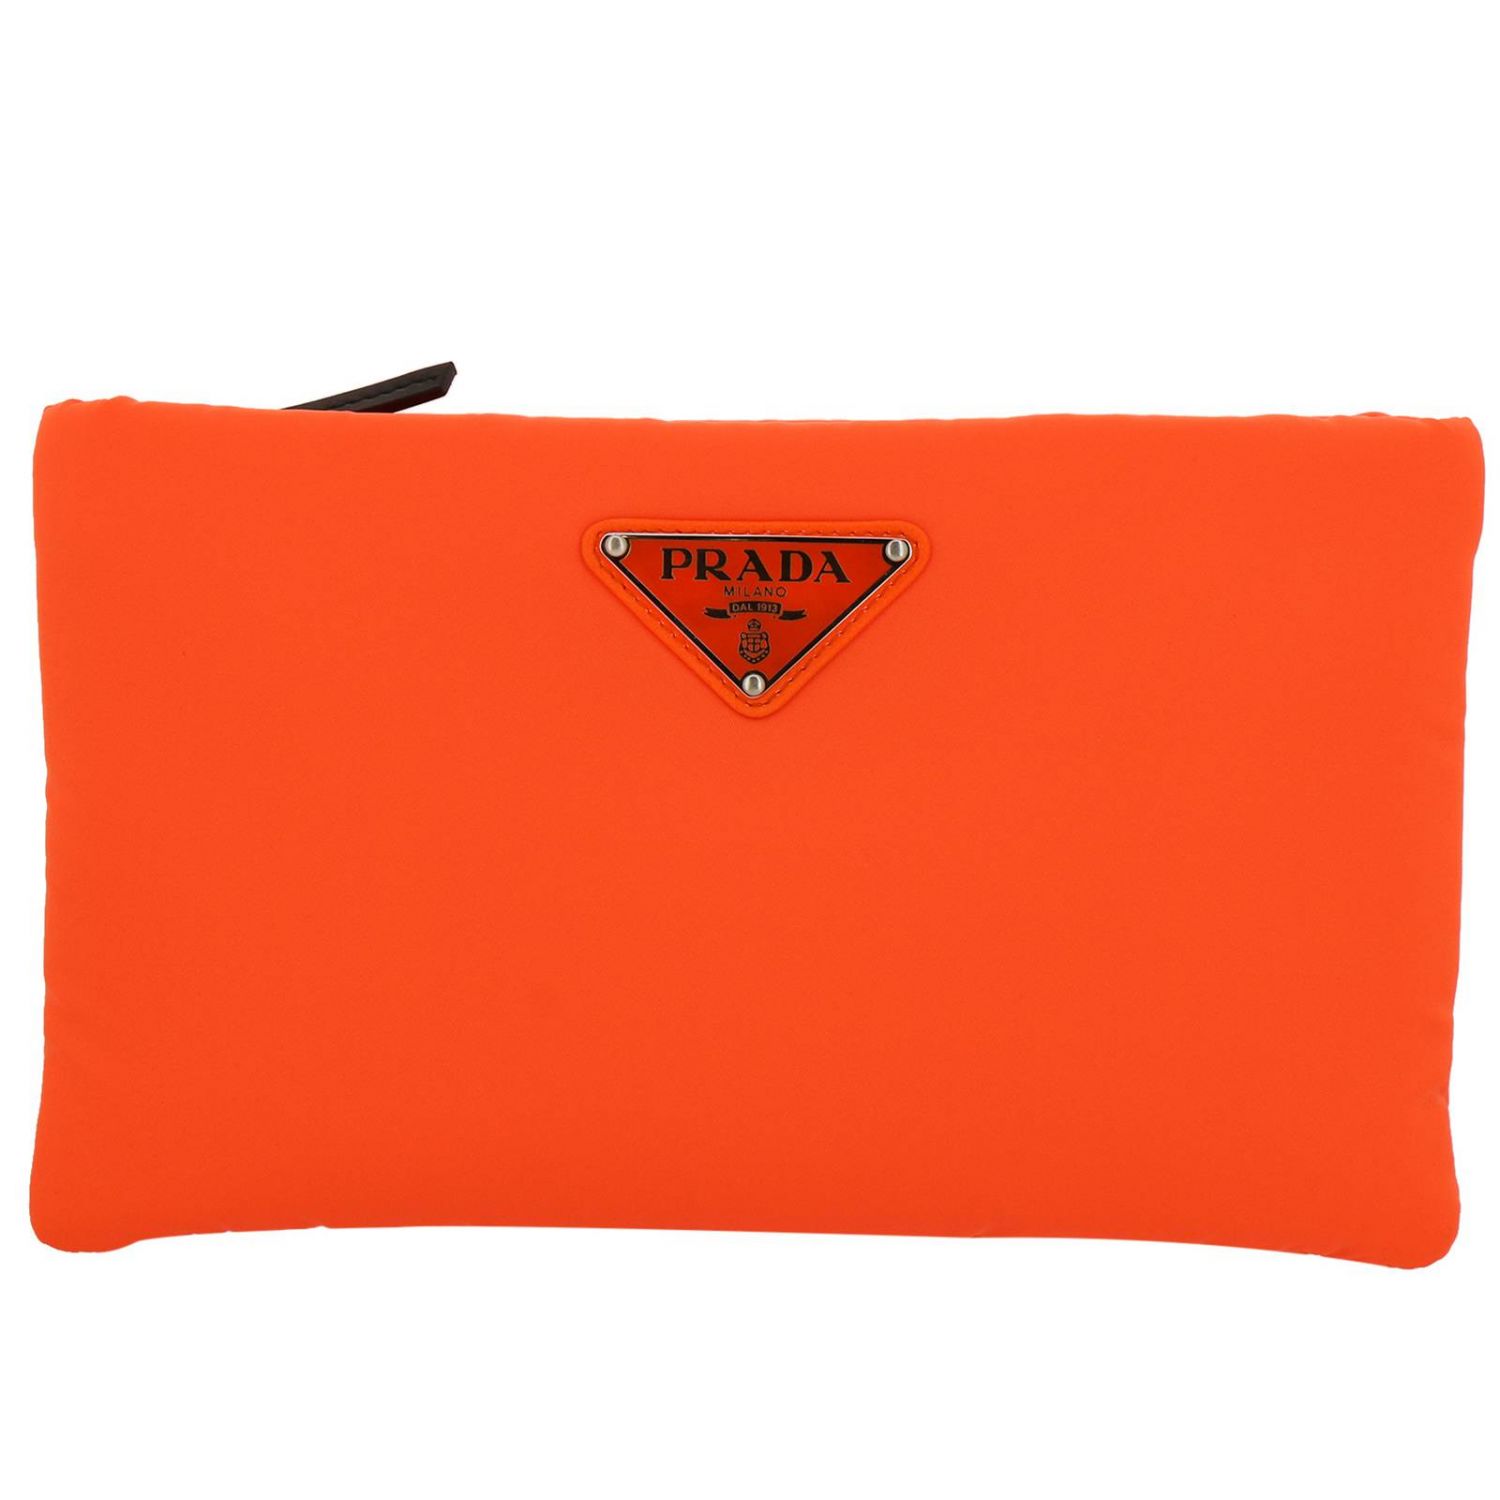 prada orange clutch